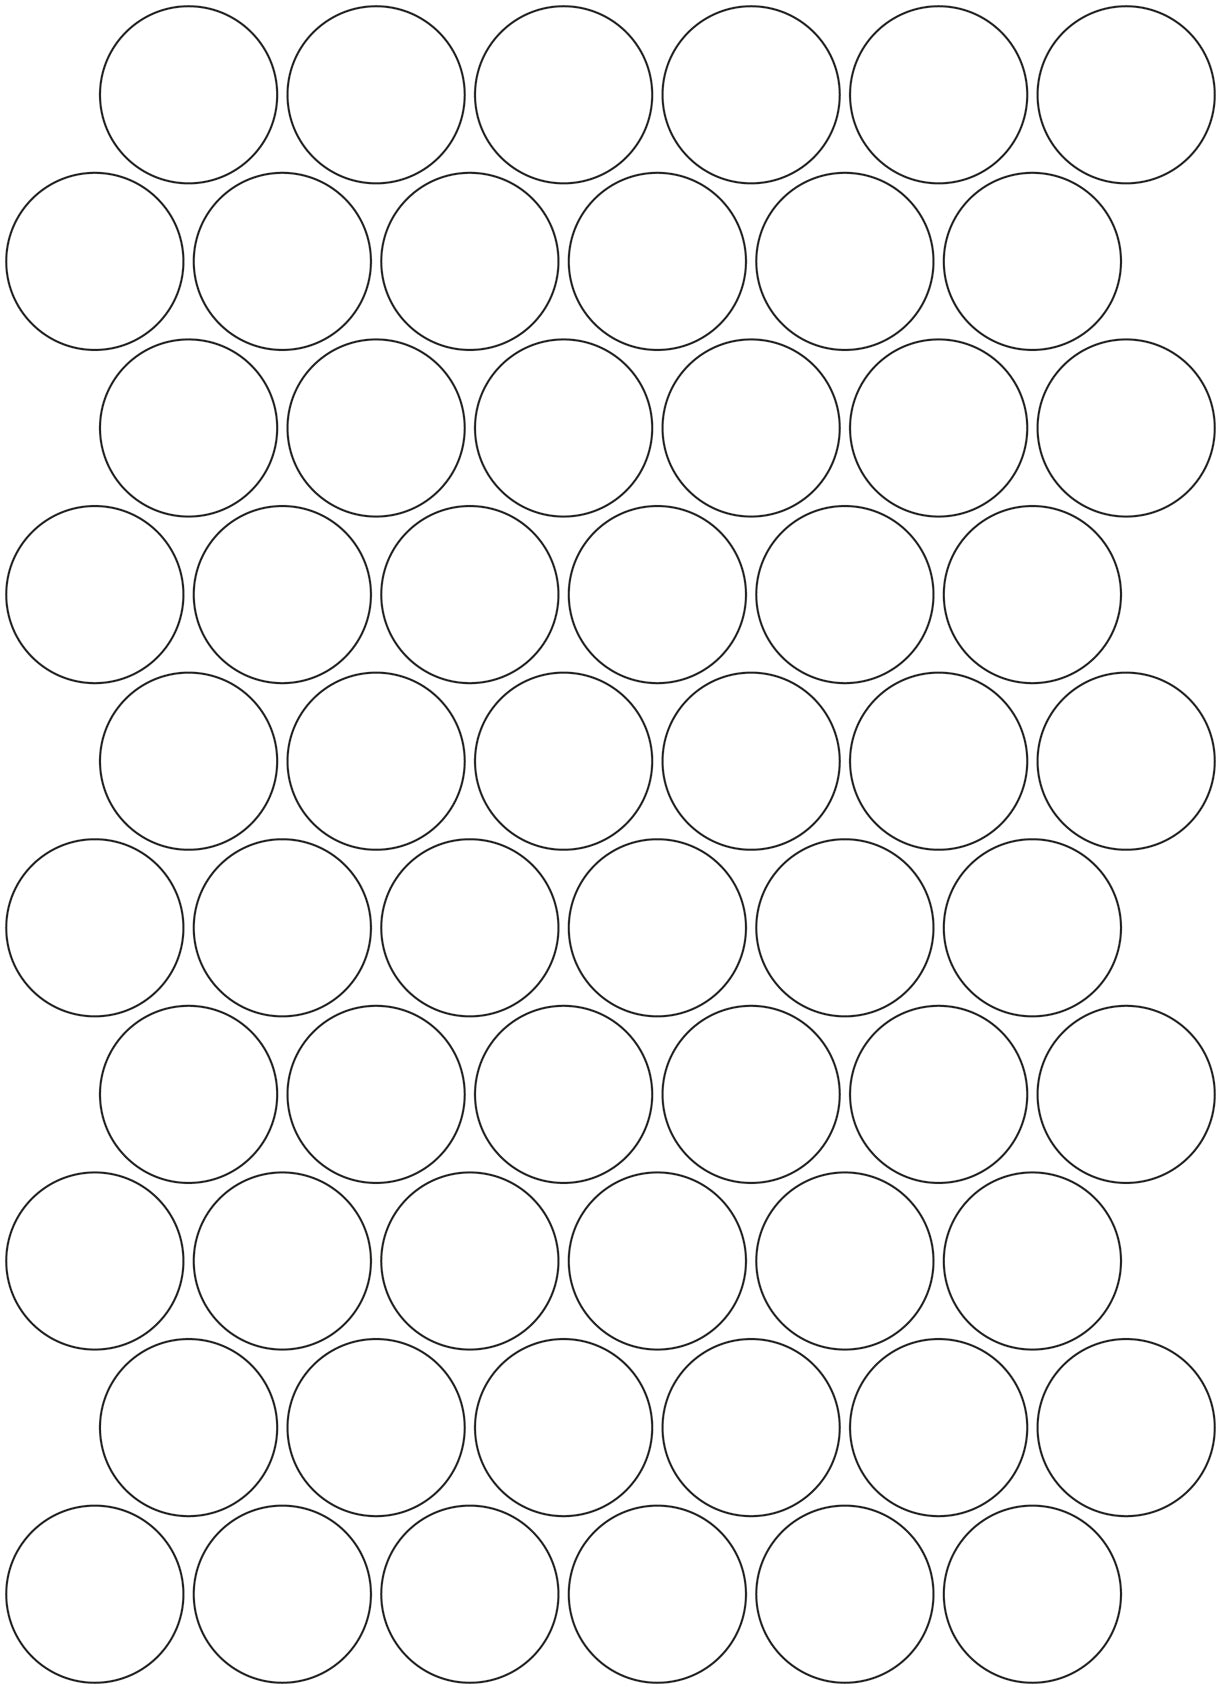 3M White/Silver Reflective Circles - A4 Sheet 30mm Circles